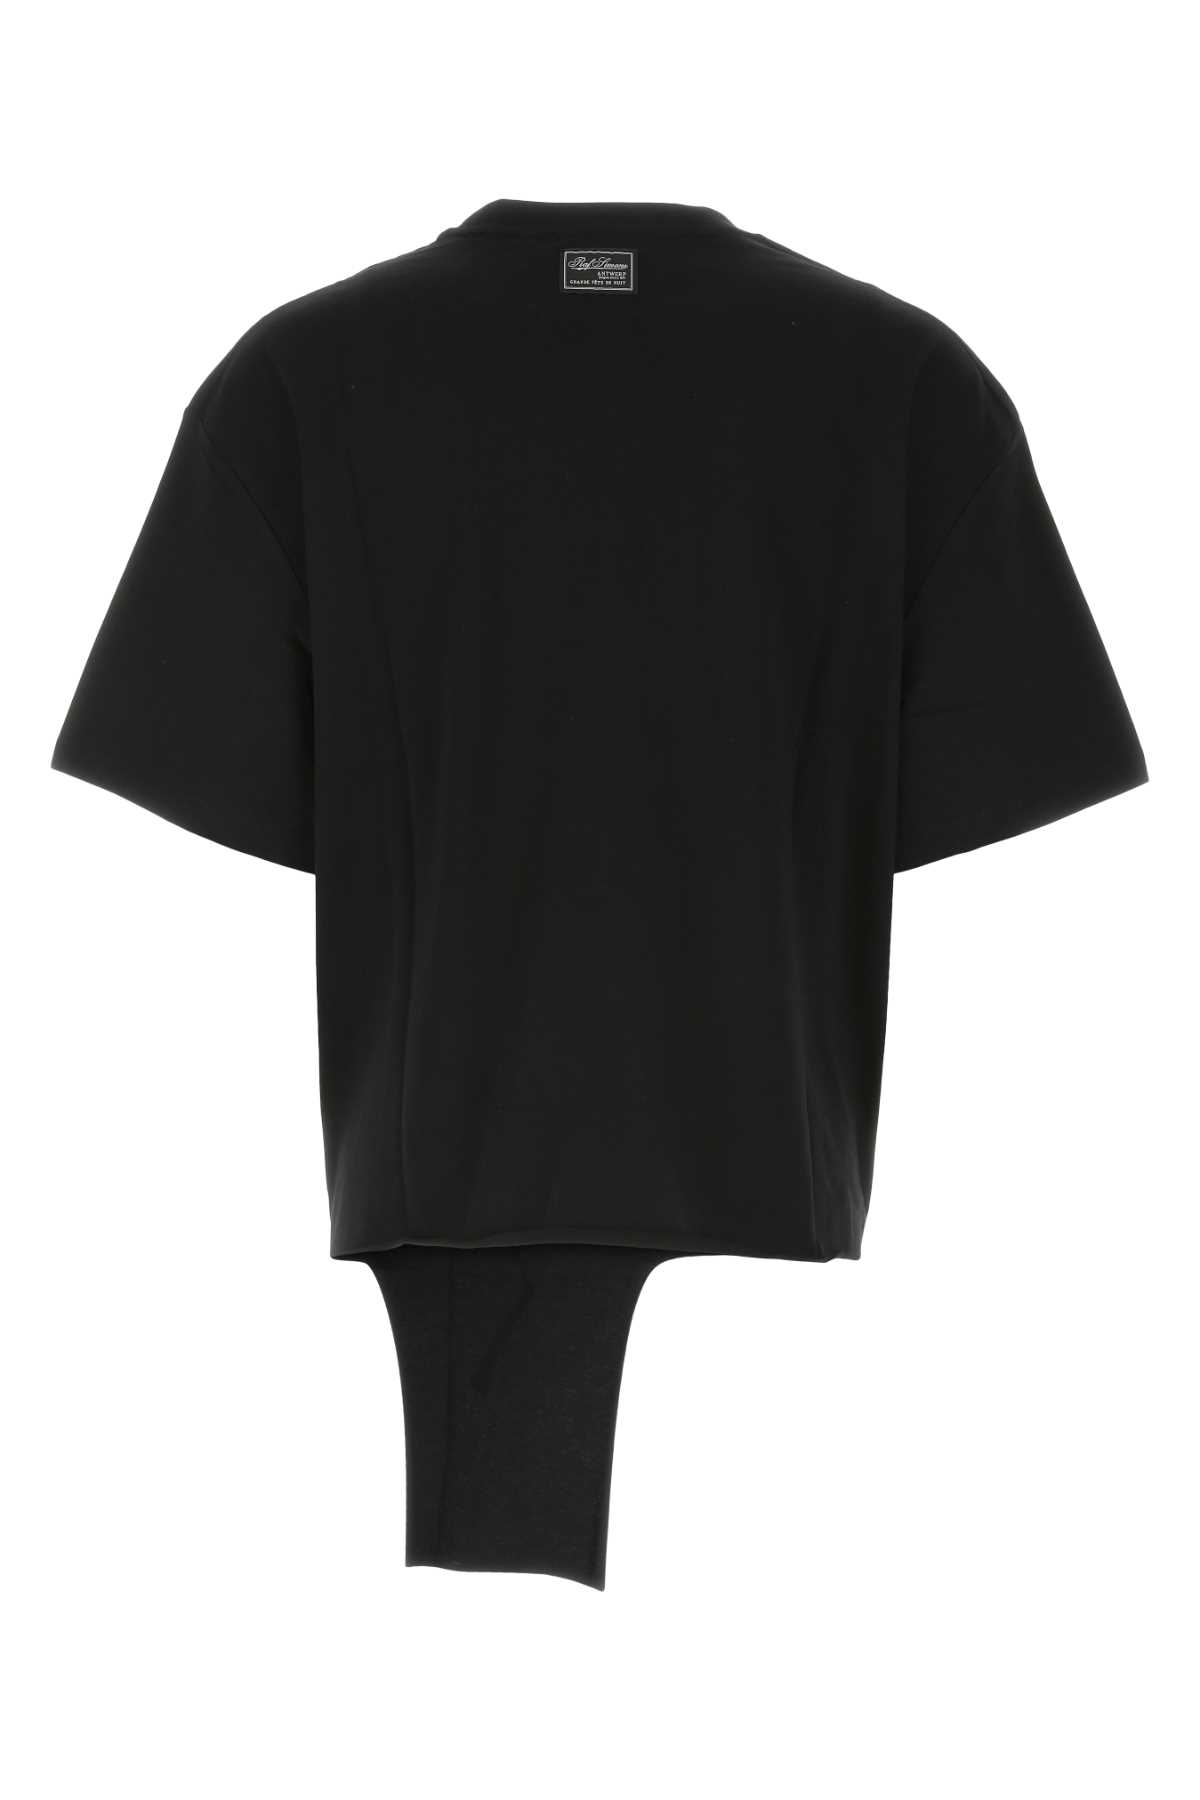 Raf Simons Black Cotton Oversize T-shirt In 0099